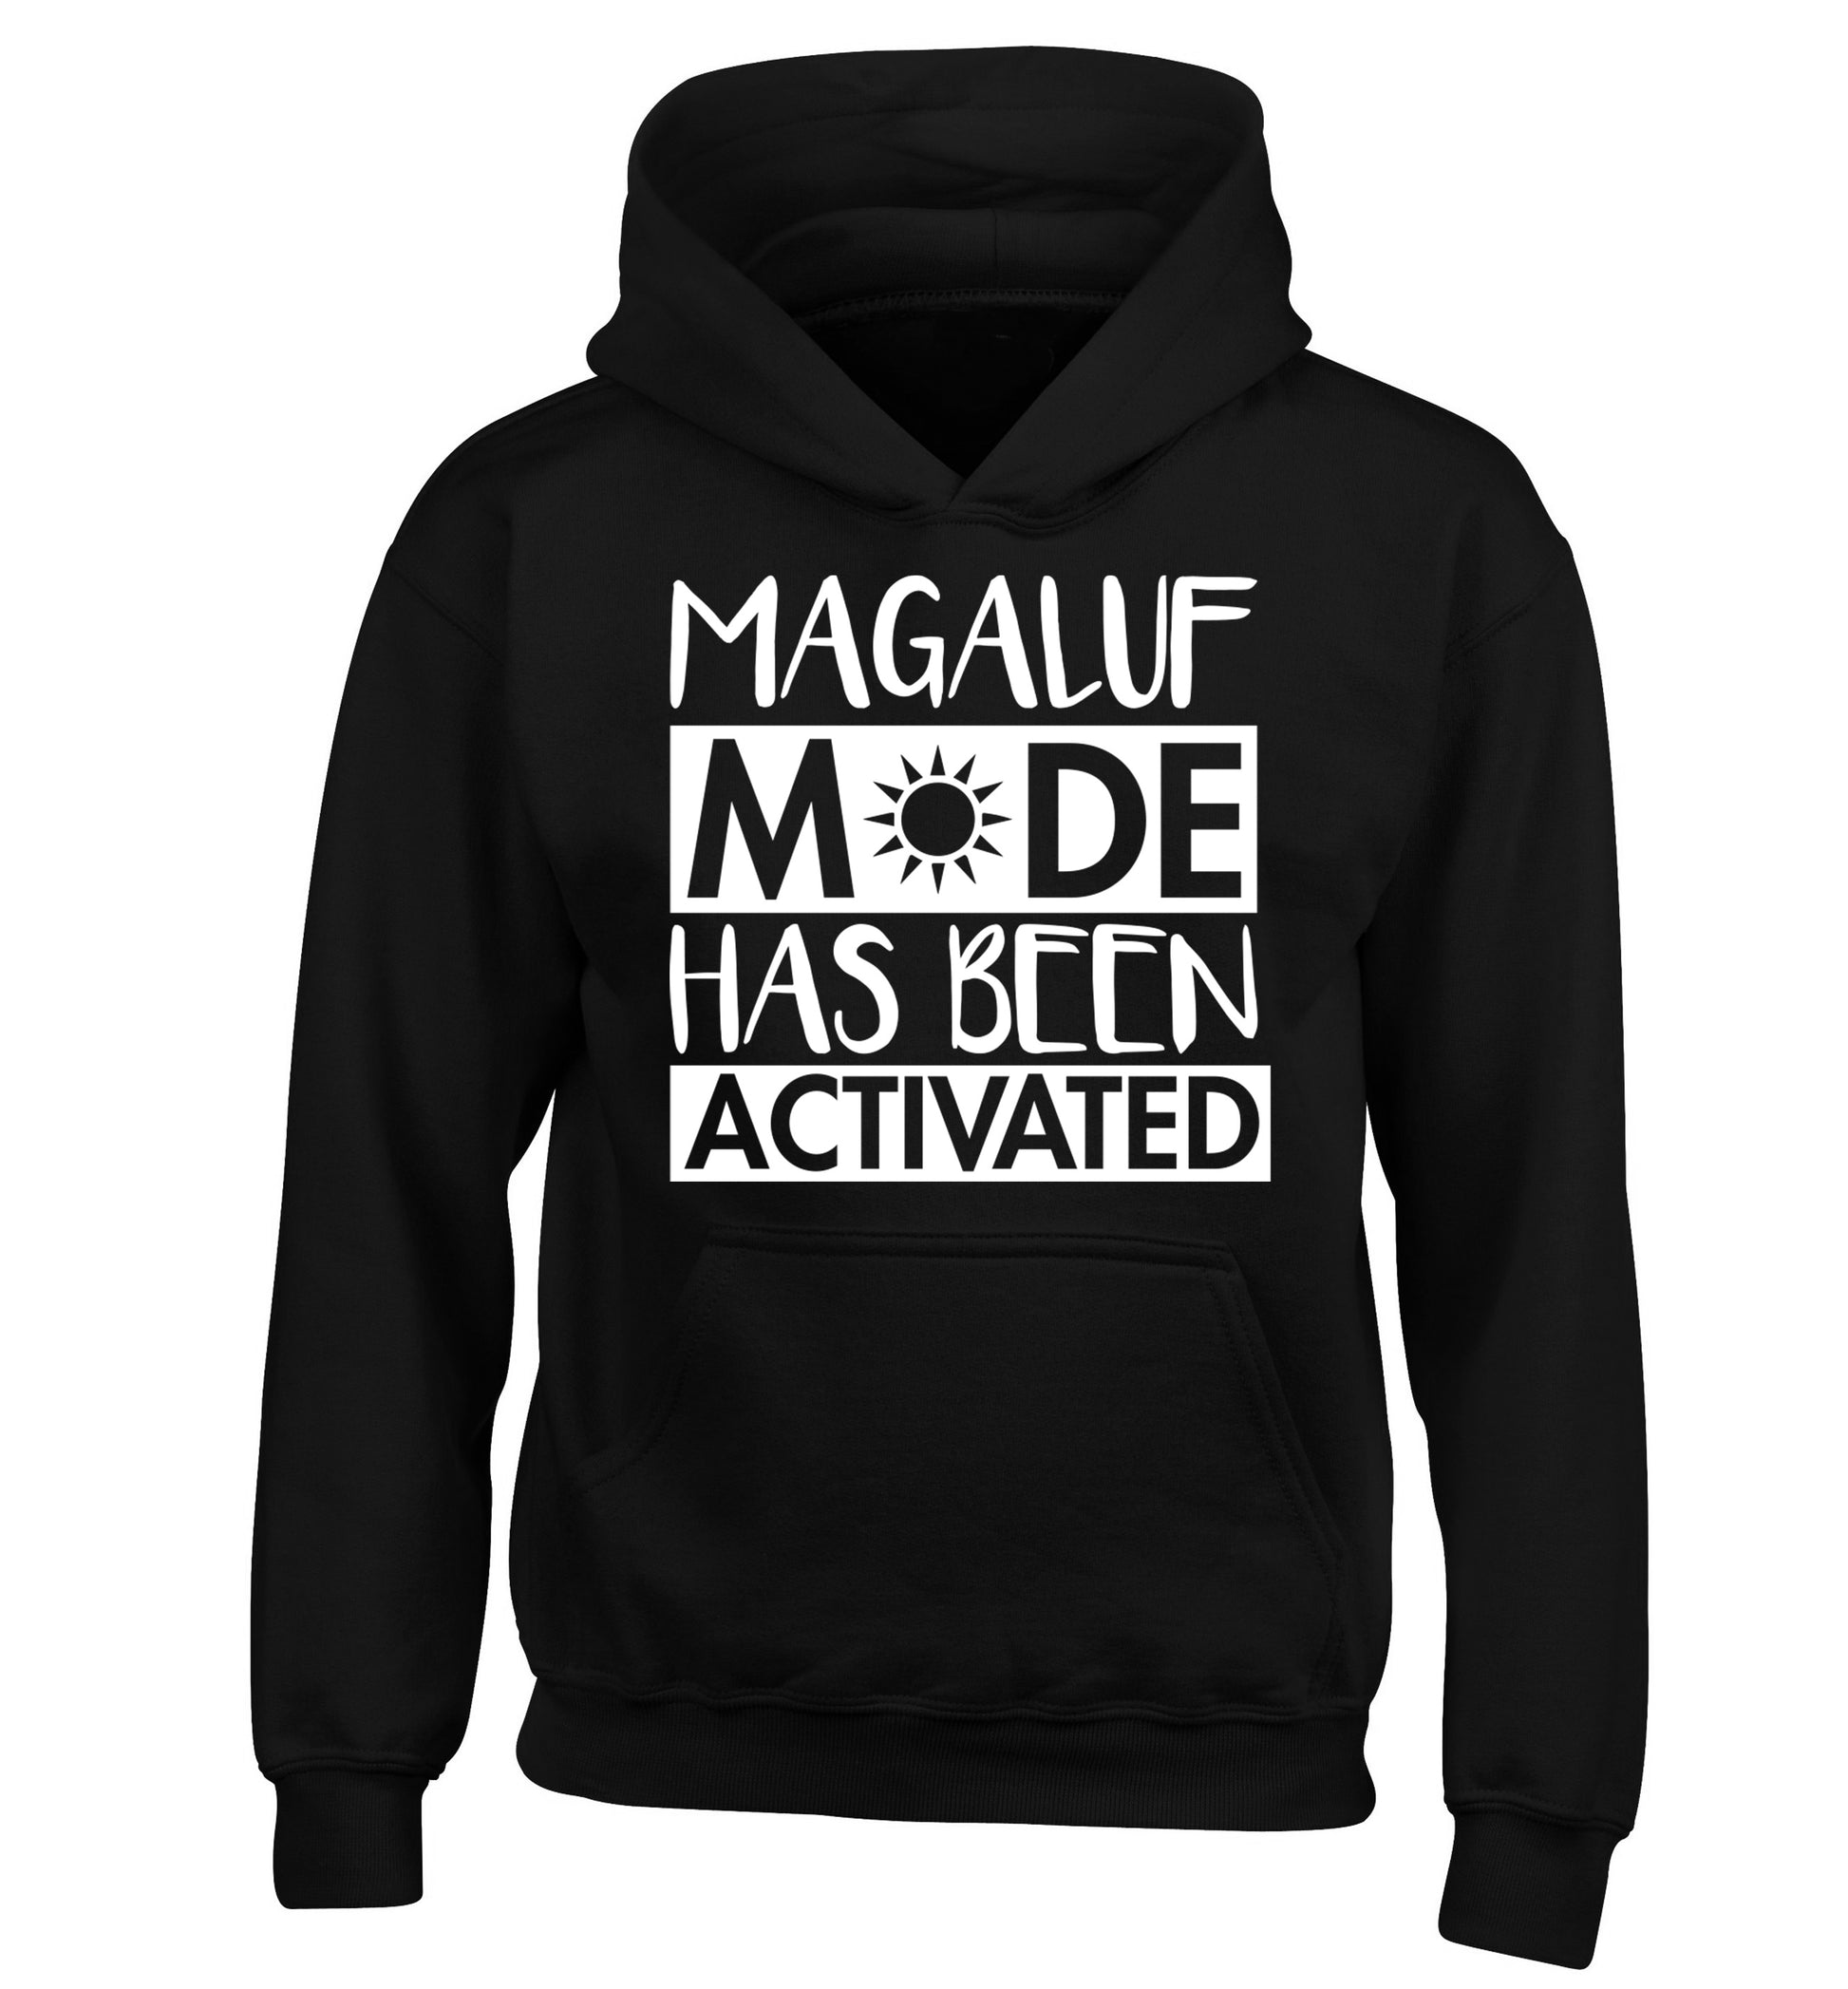 Magaluf mode has been activated children's black hoodie 12-13 Years